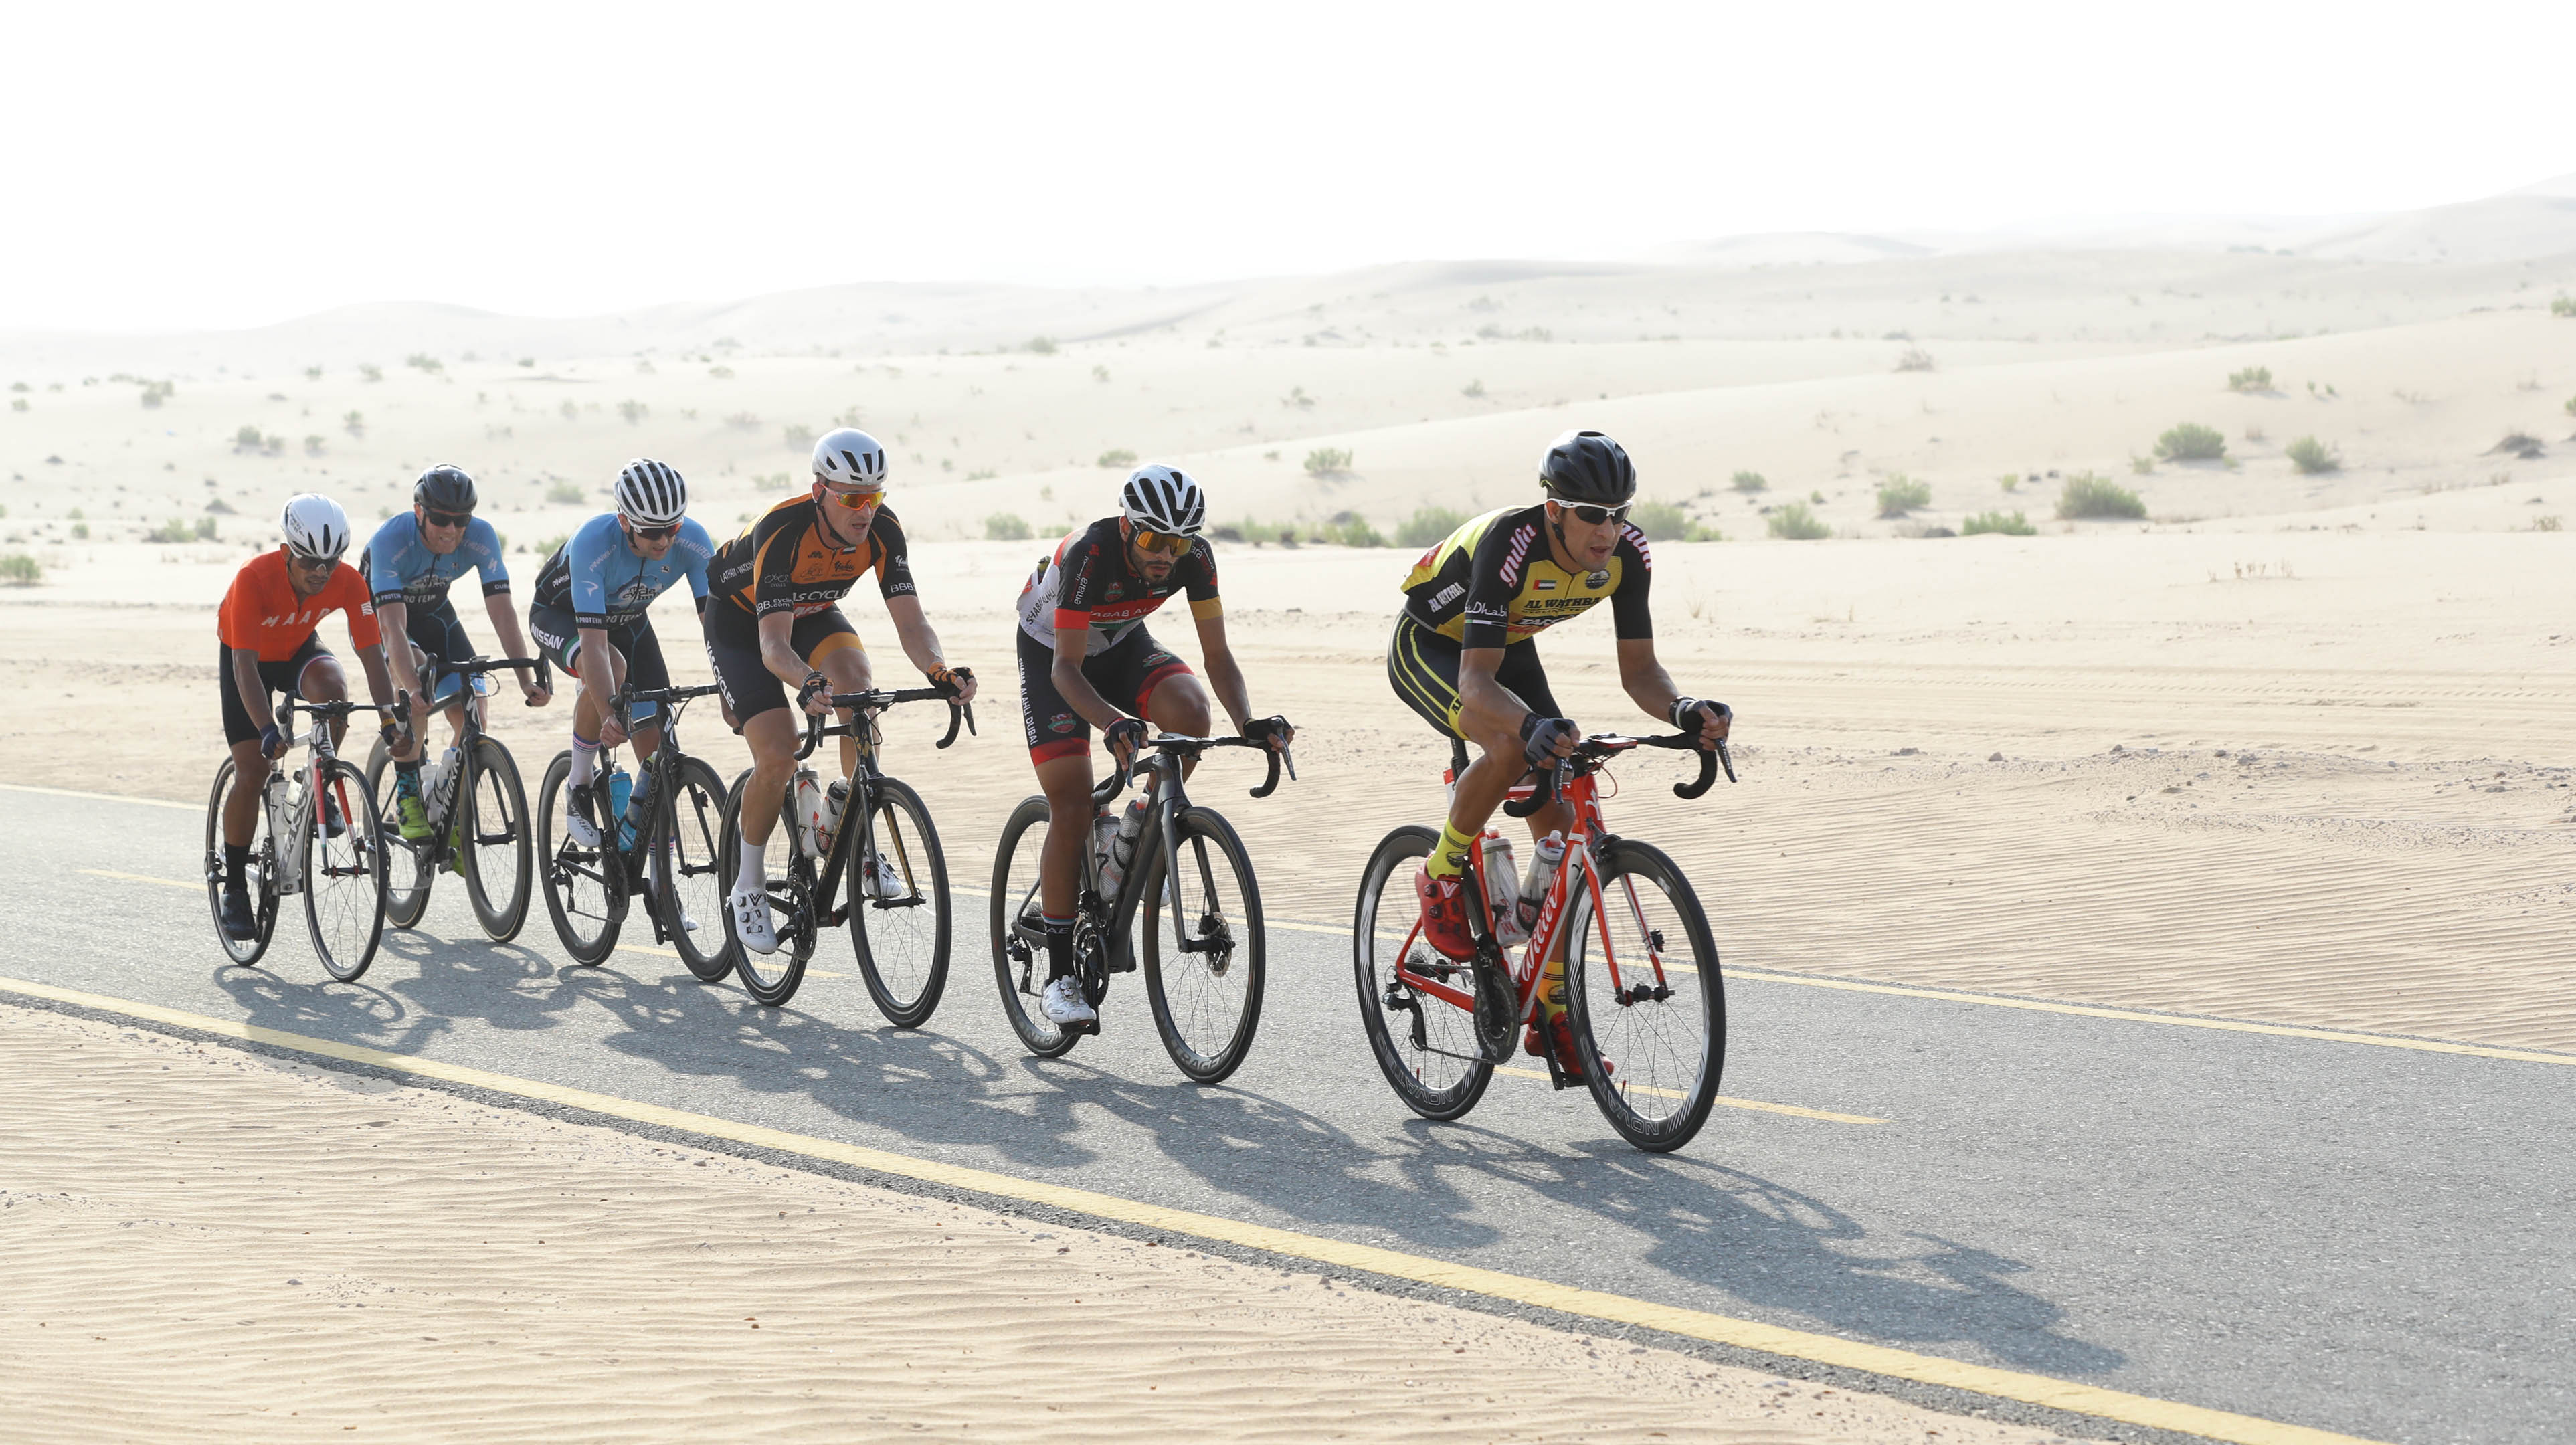 Cycling on Al Wathba Cycle Track in Abu Dhabi